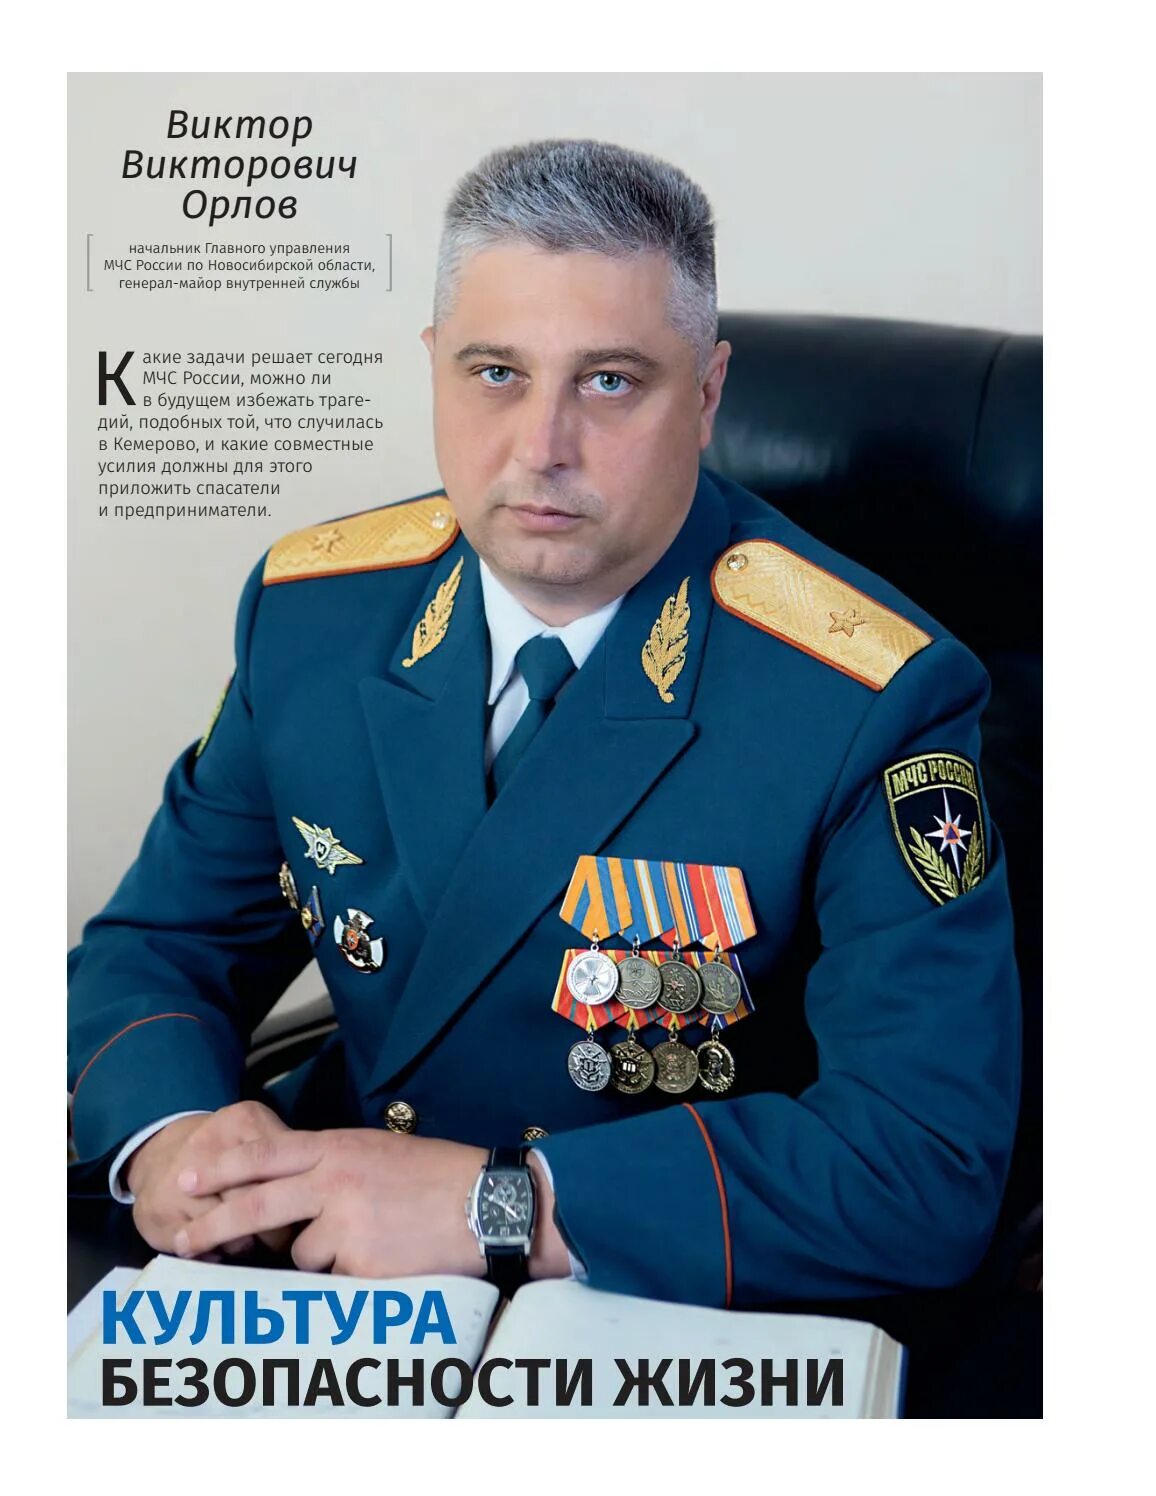 Генерал Орлов МЧС Новосибирск. Генерал карпюк МЧС.